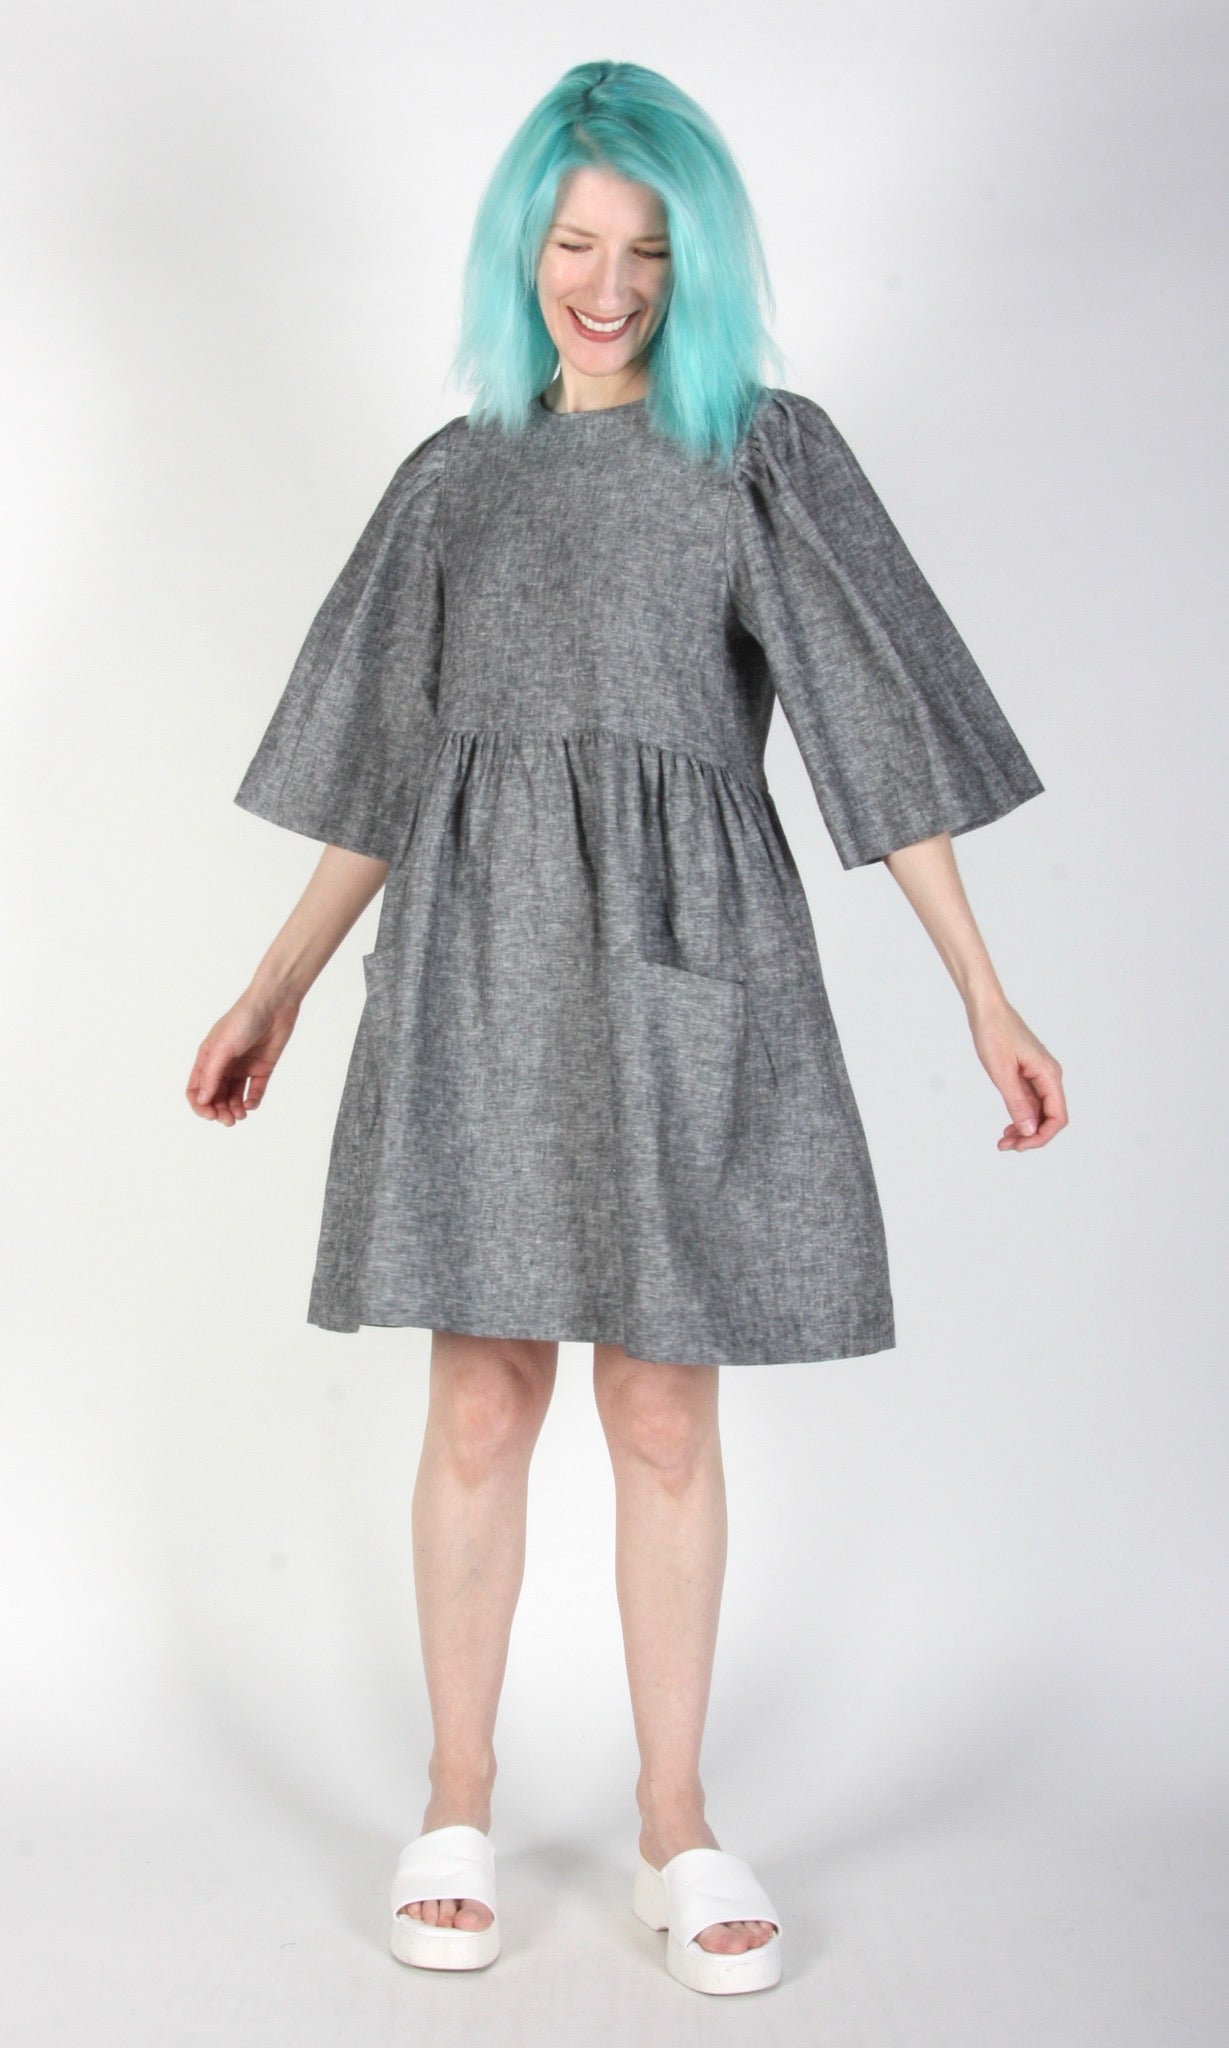 Chimney Swift Dress - Conté